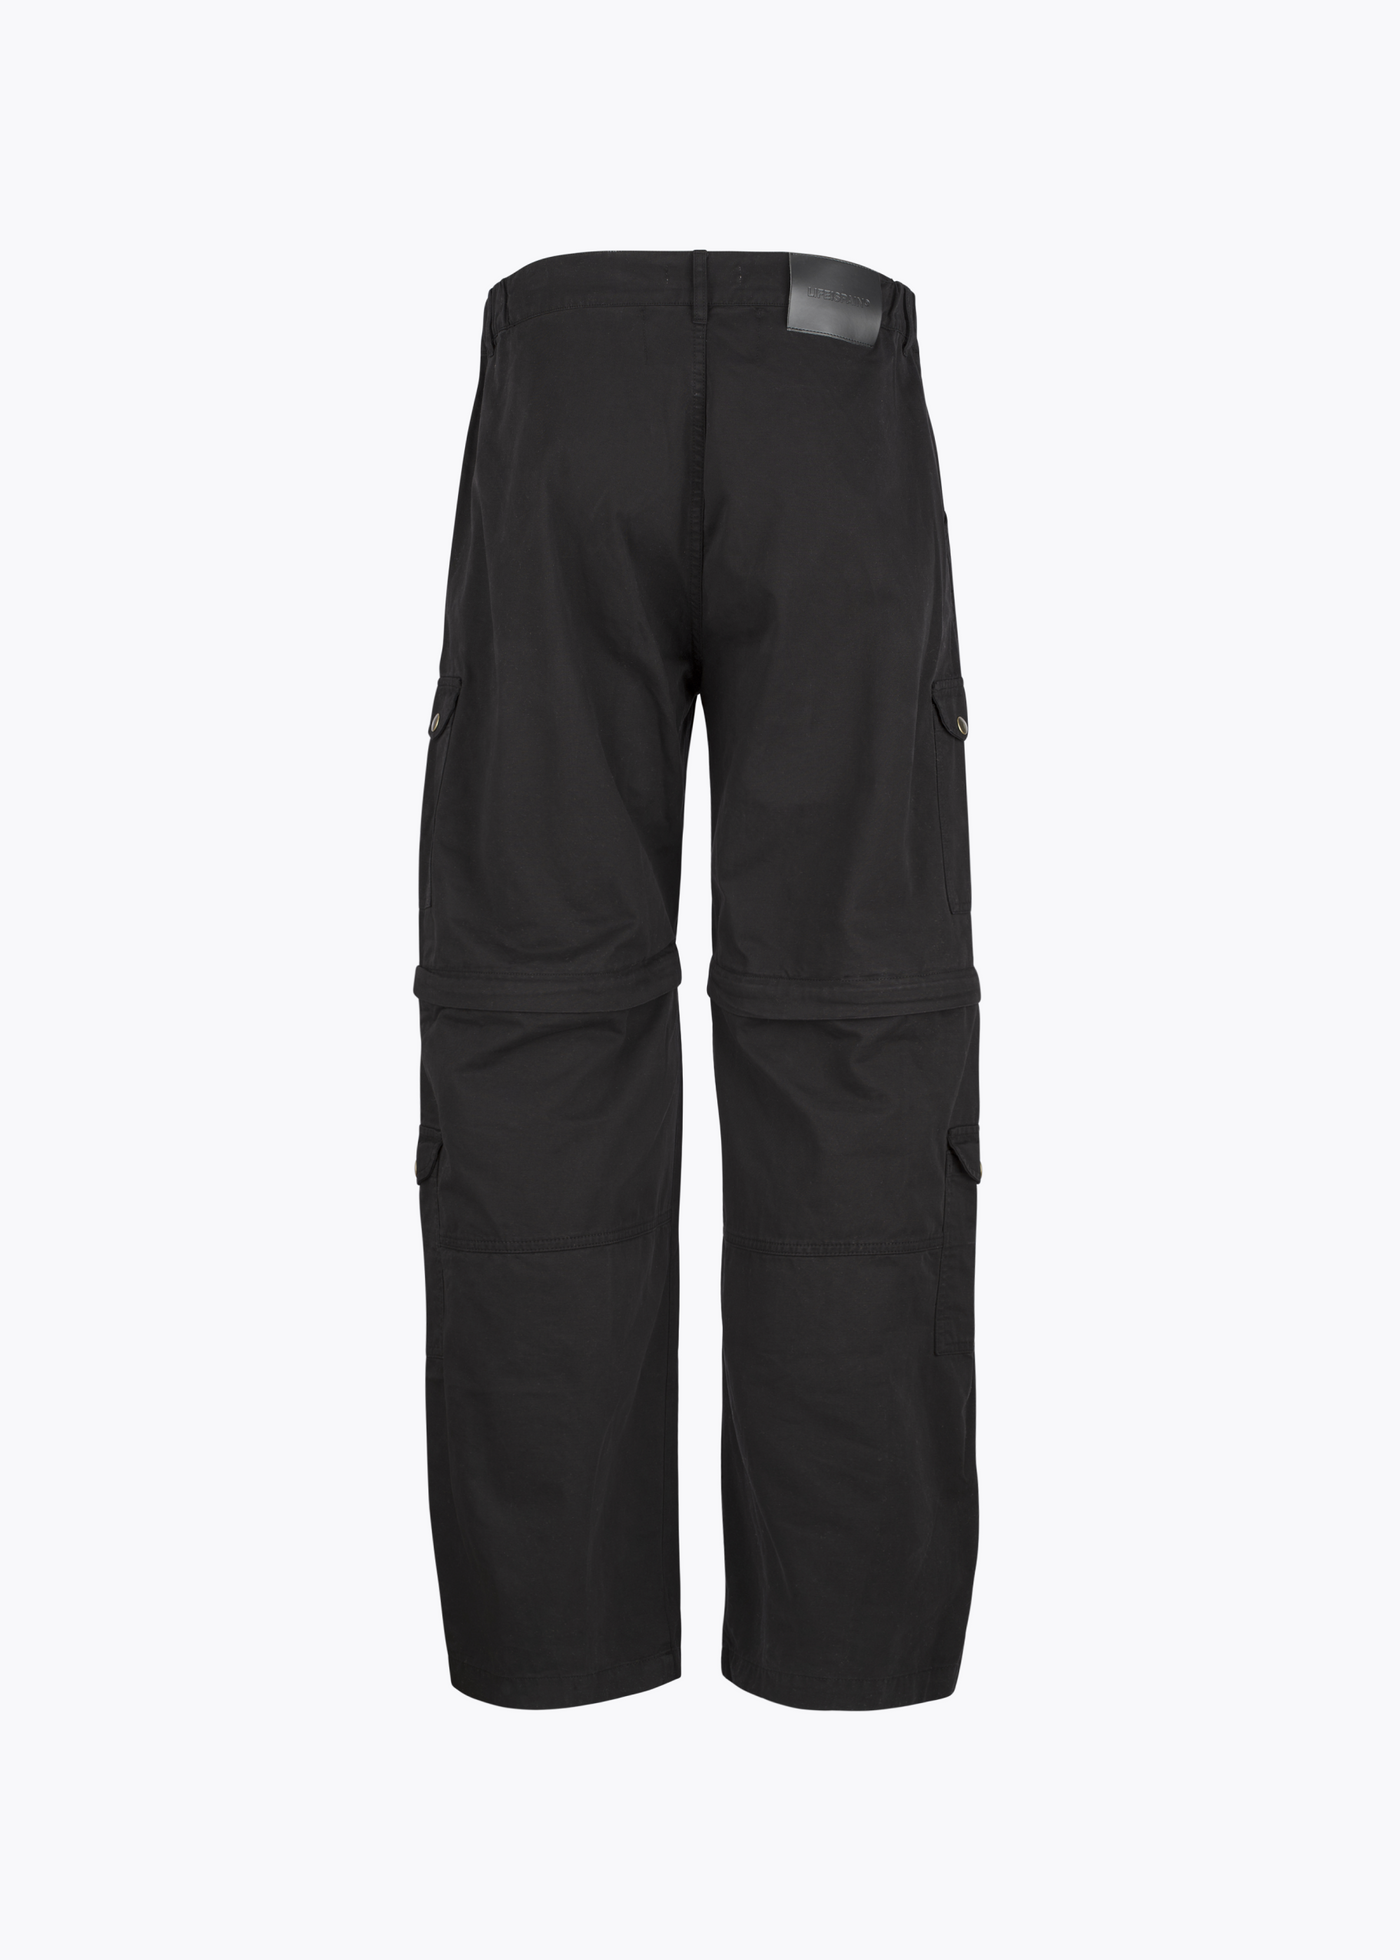 Khaki cargo pants/shorts